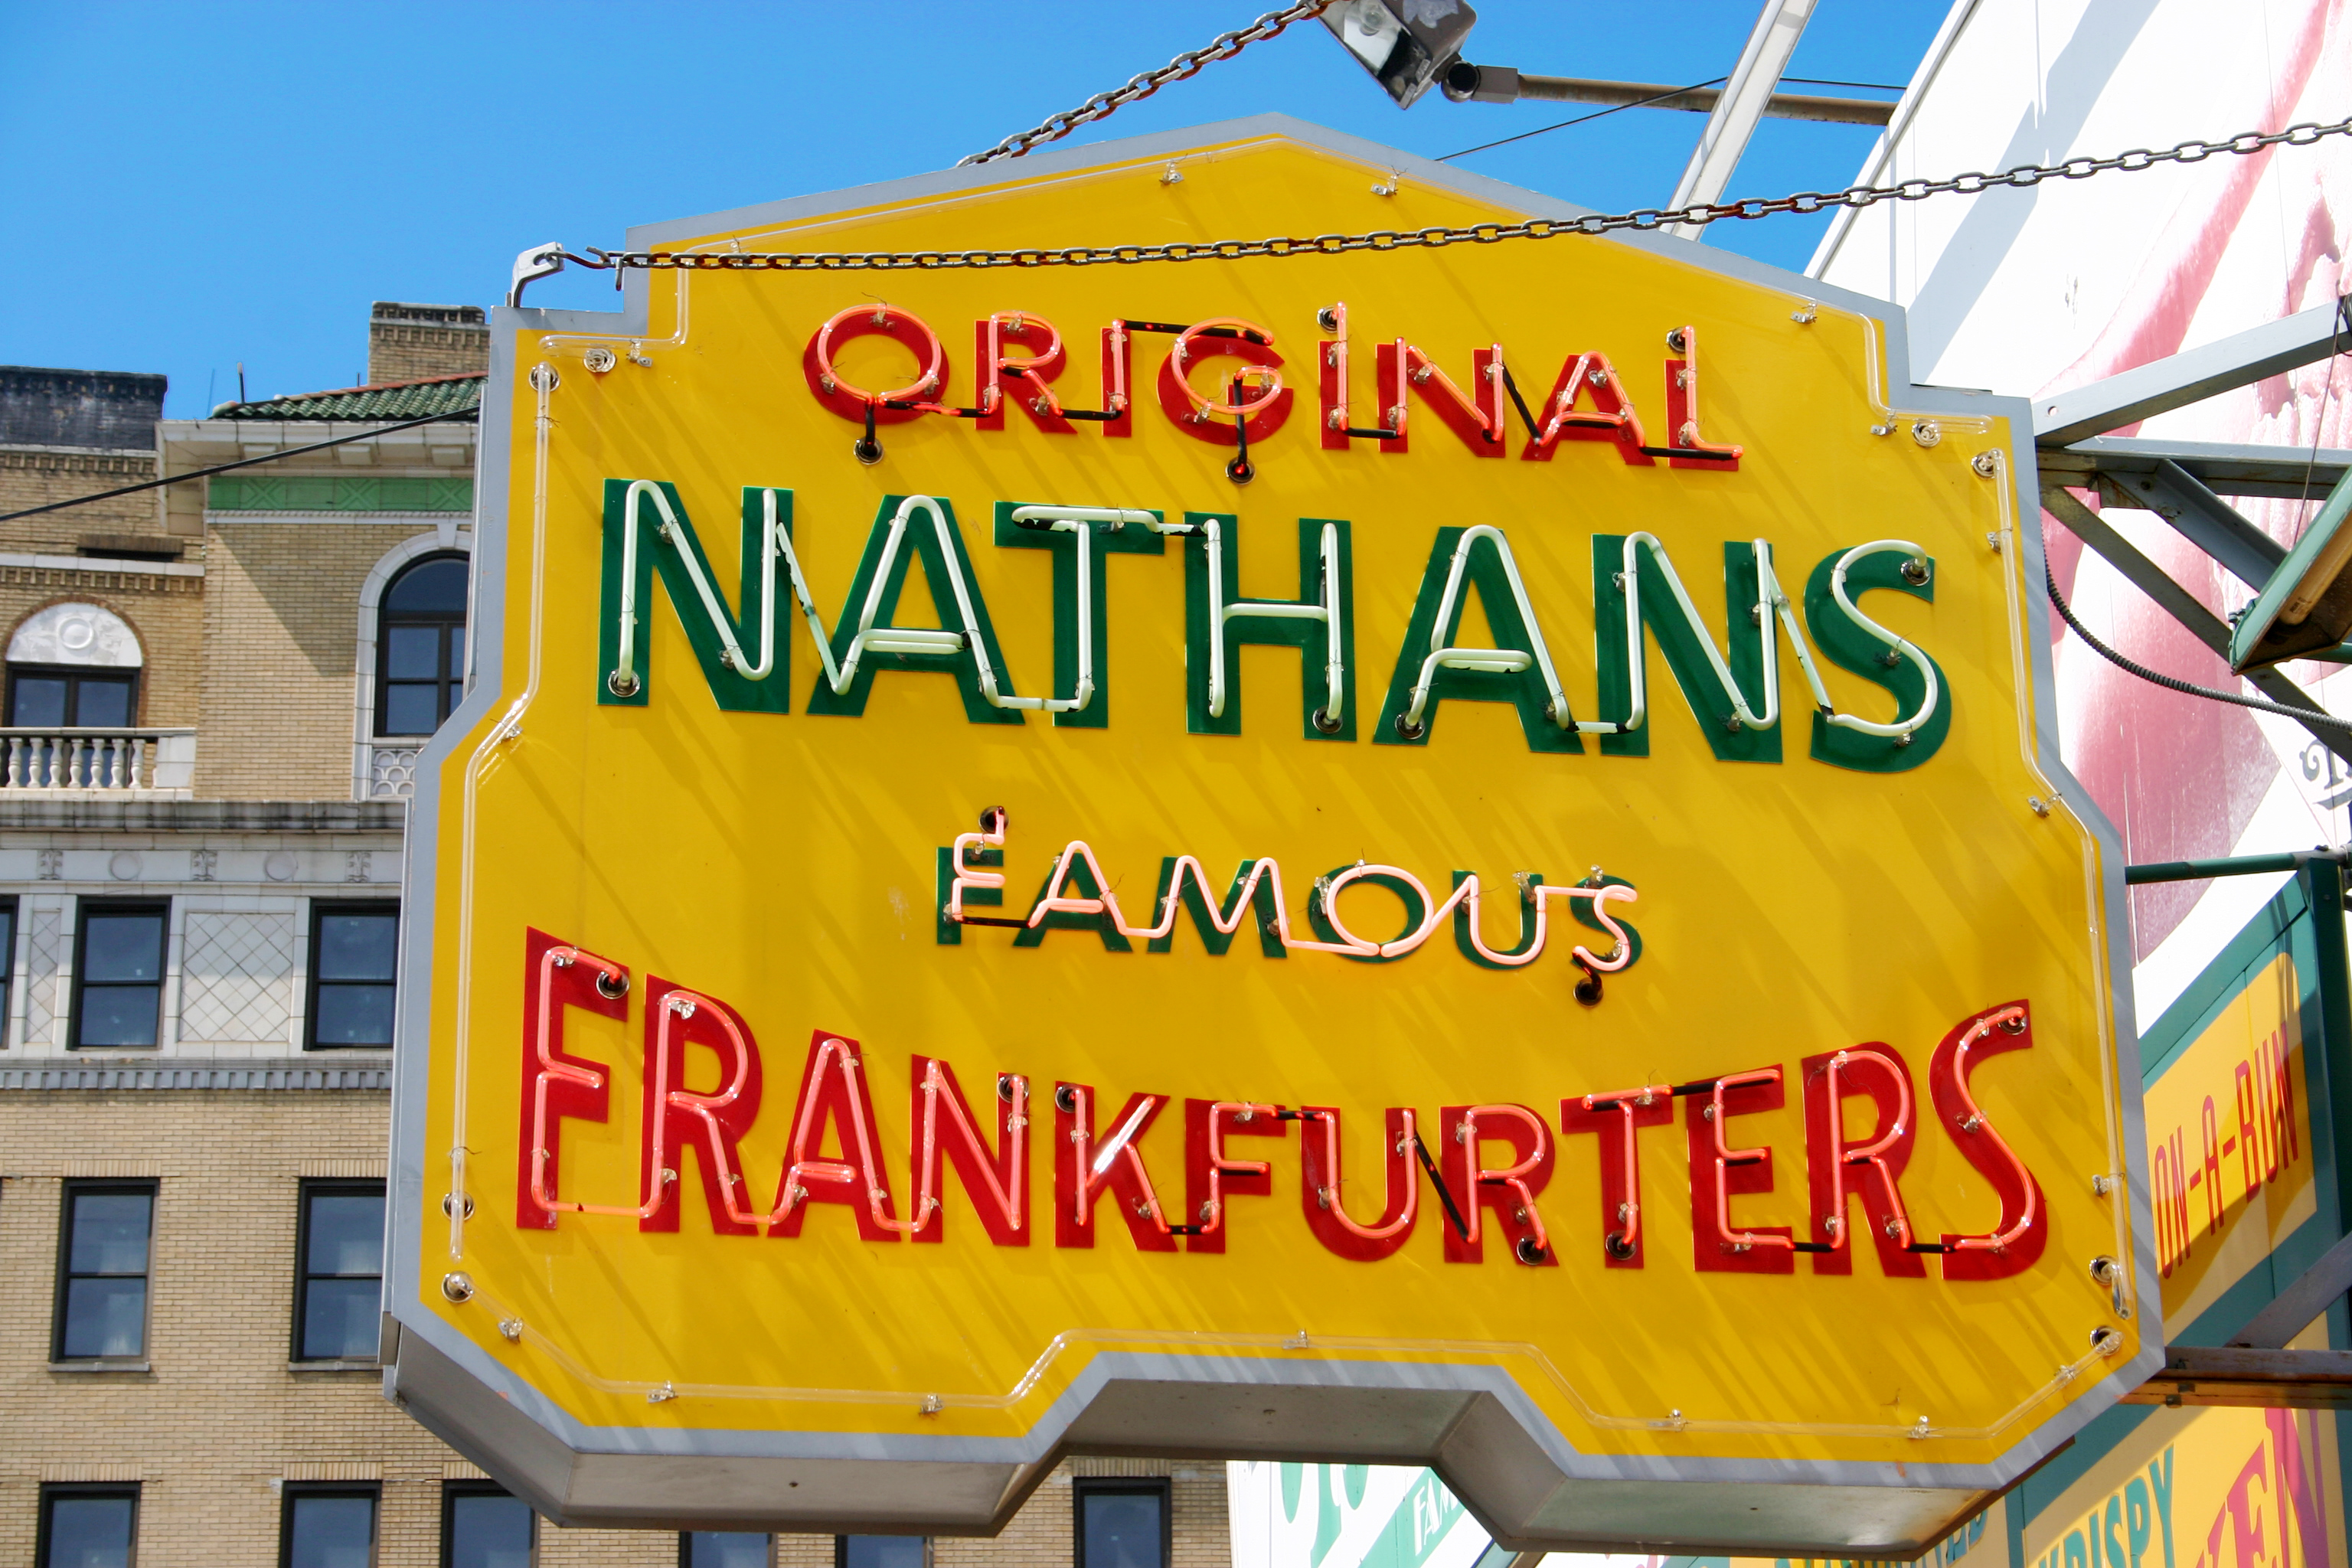 Nathan’s Famous Coney Island Frankfurters